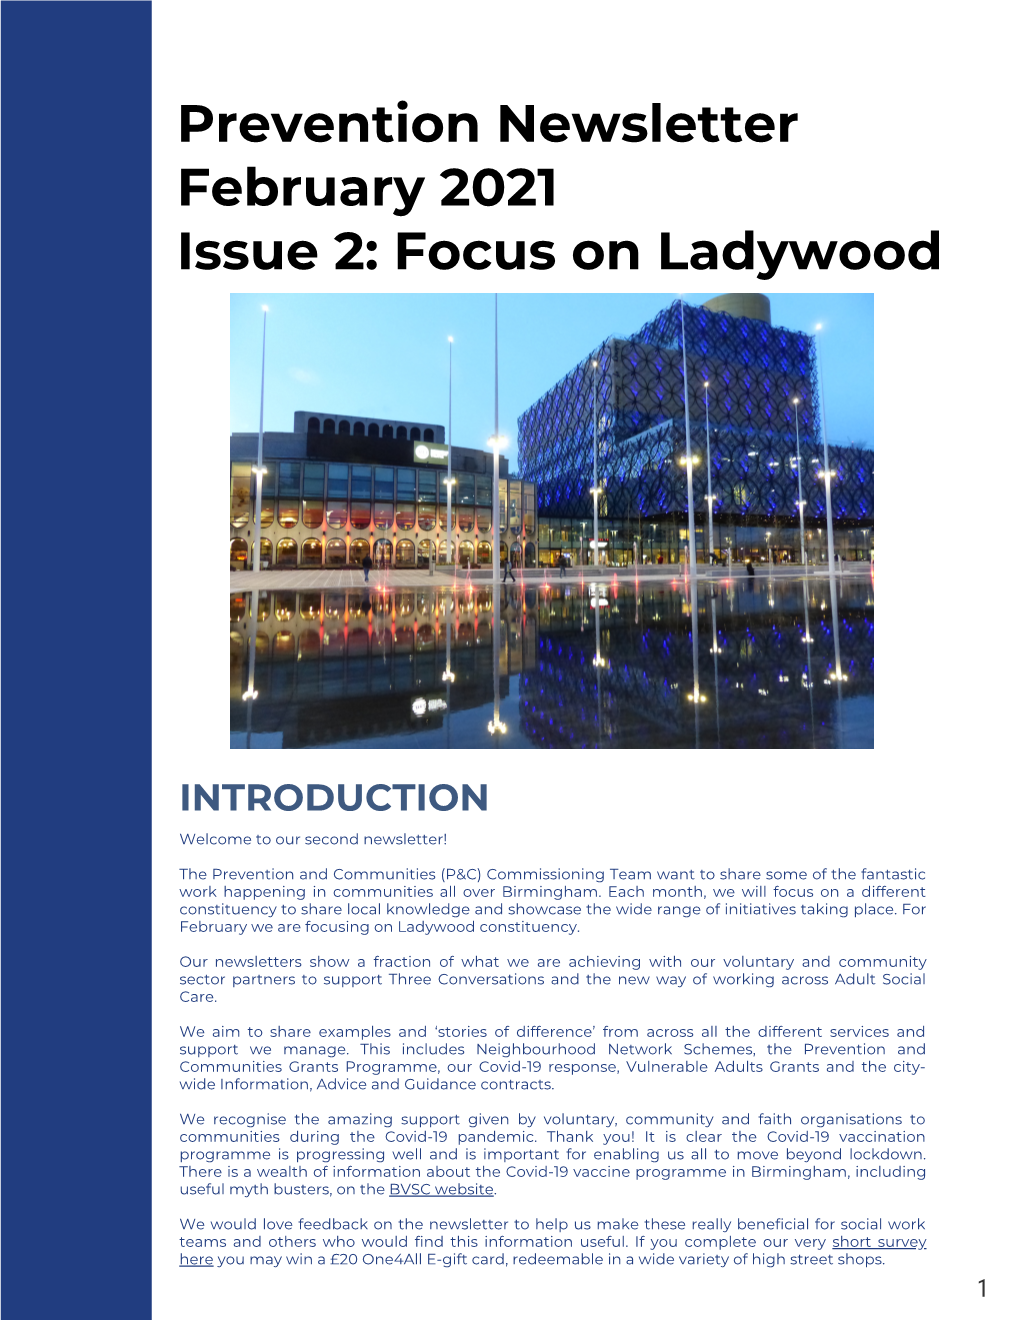 Prevention Newsletter February 2021 Issue 2: Focus on Ladywood